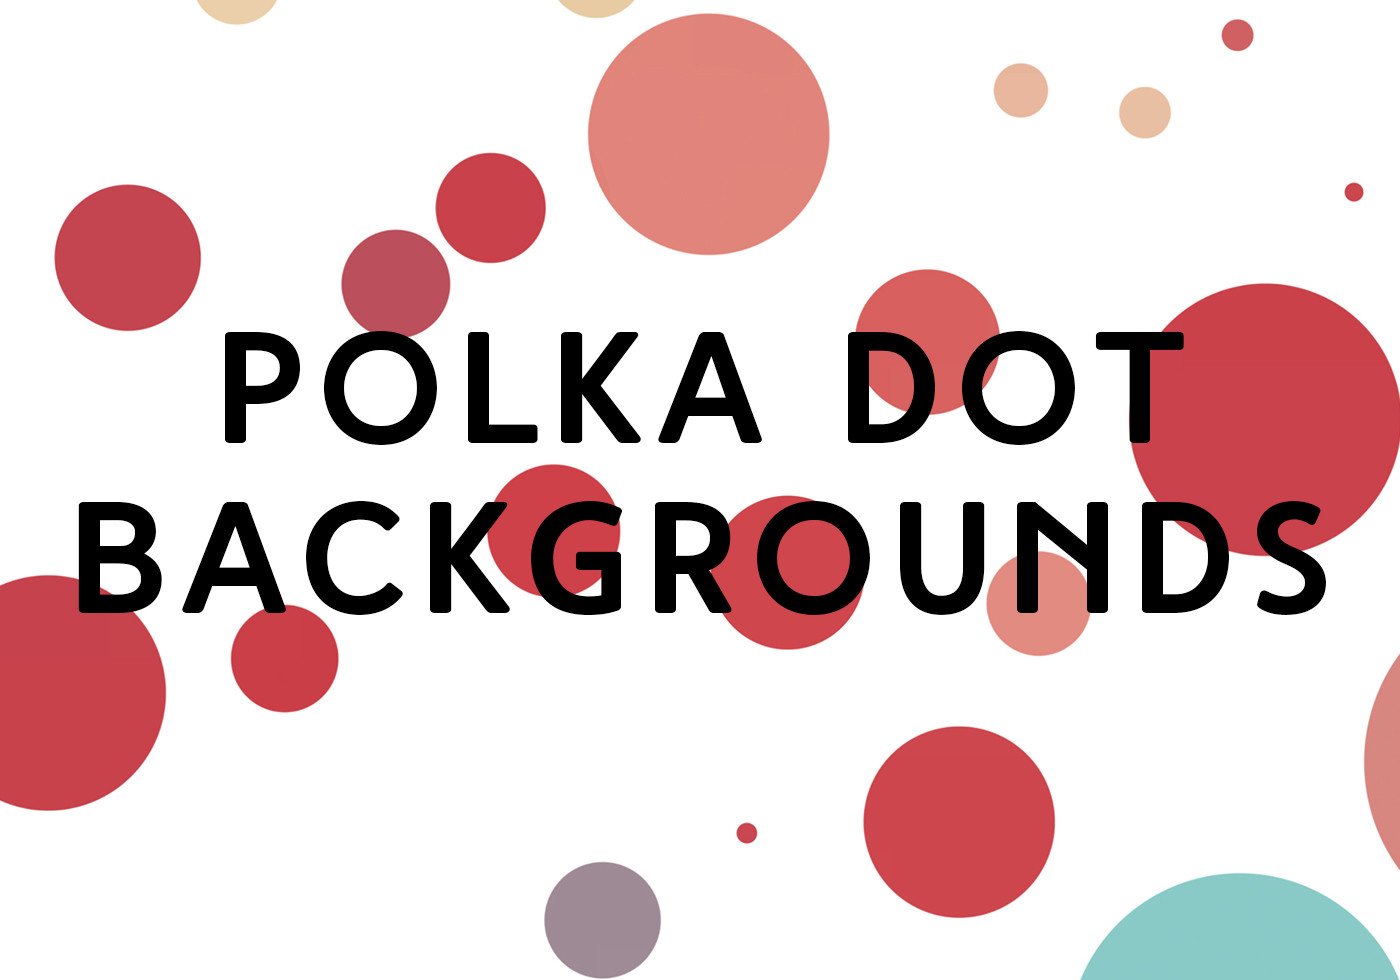 Polka Dot Backgrounds 1 Free shop Brushes at Brusheezy